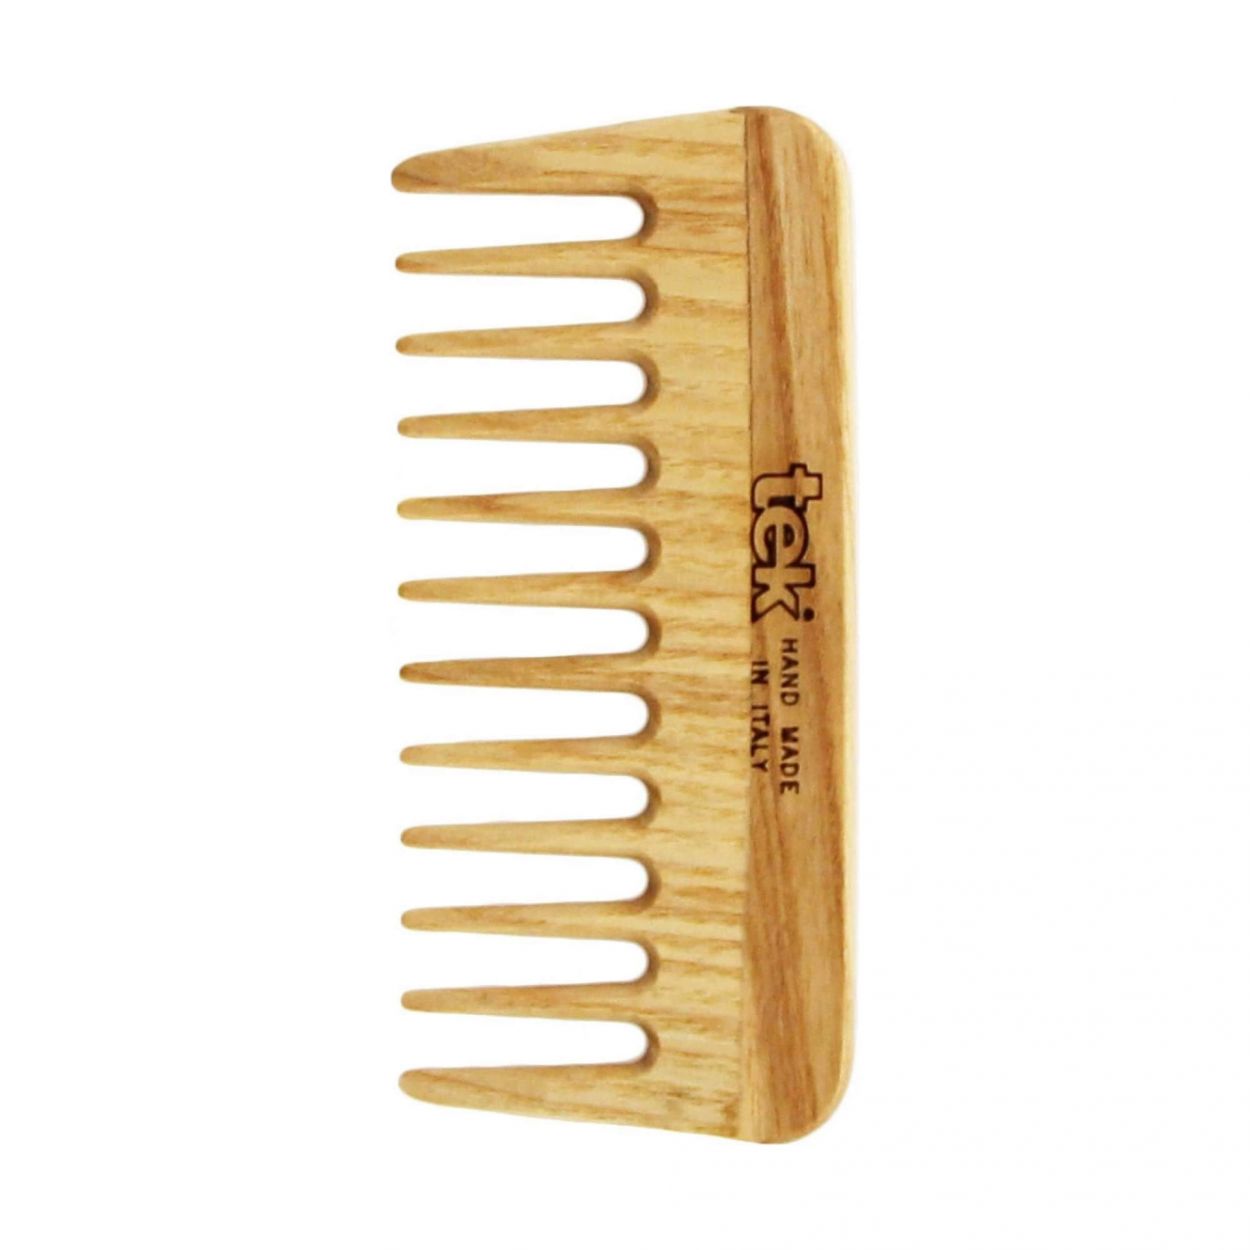 Pocket Ash Wood Comb with Wide Teeth